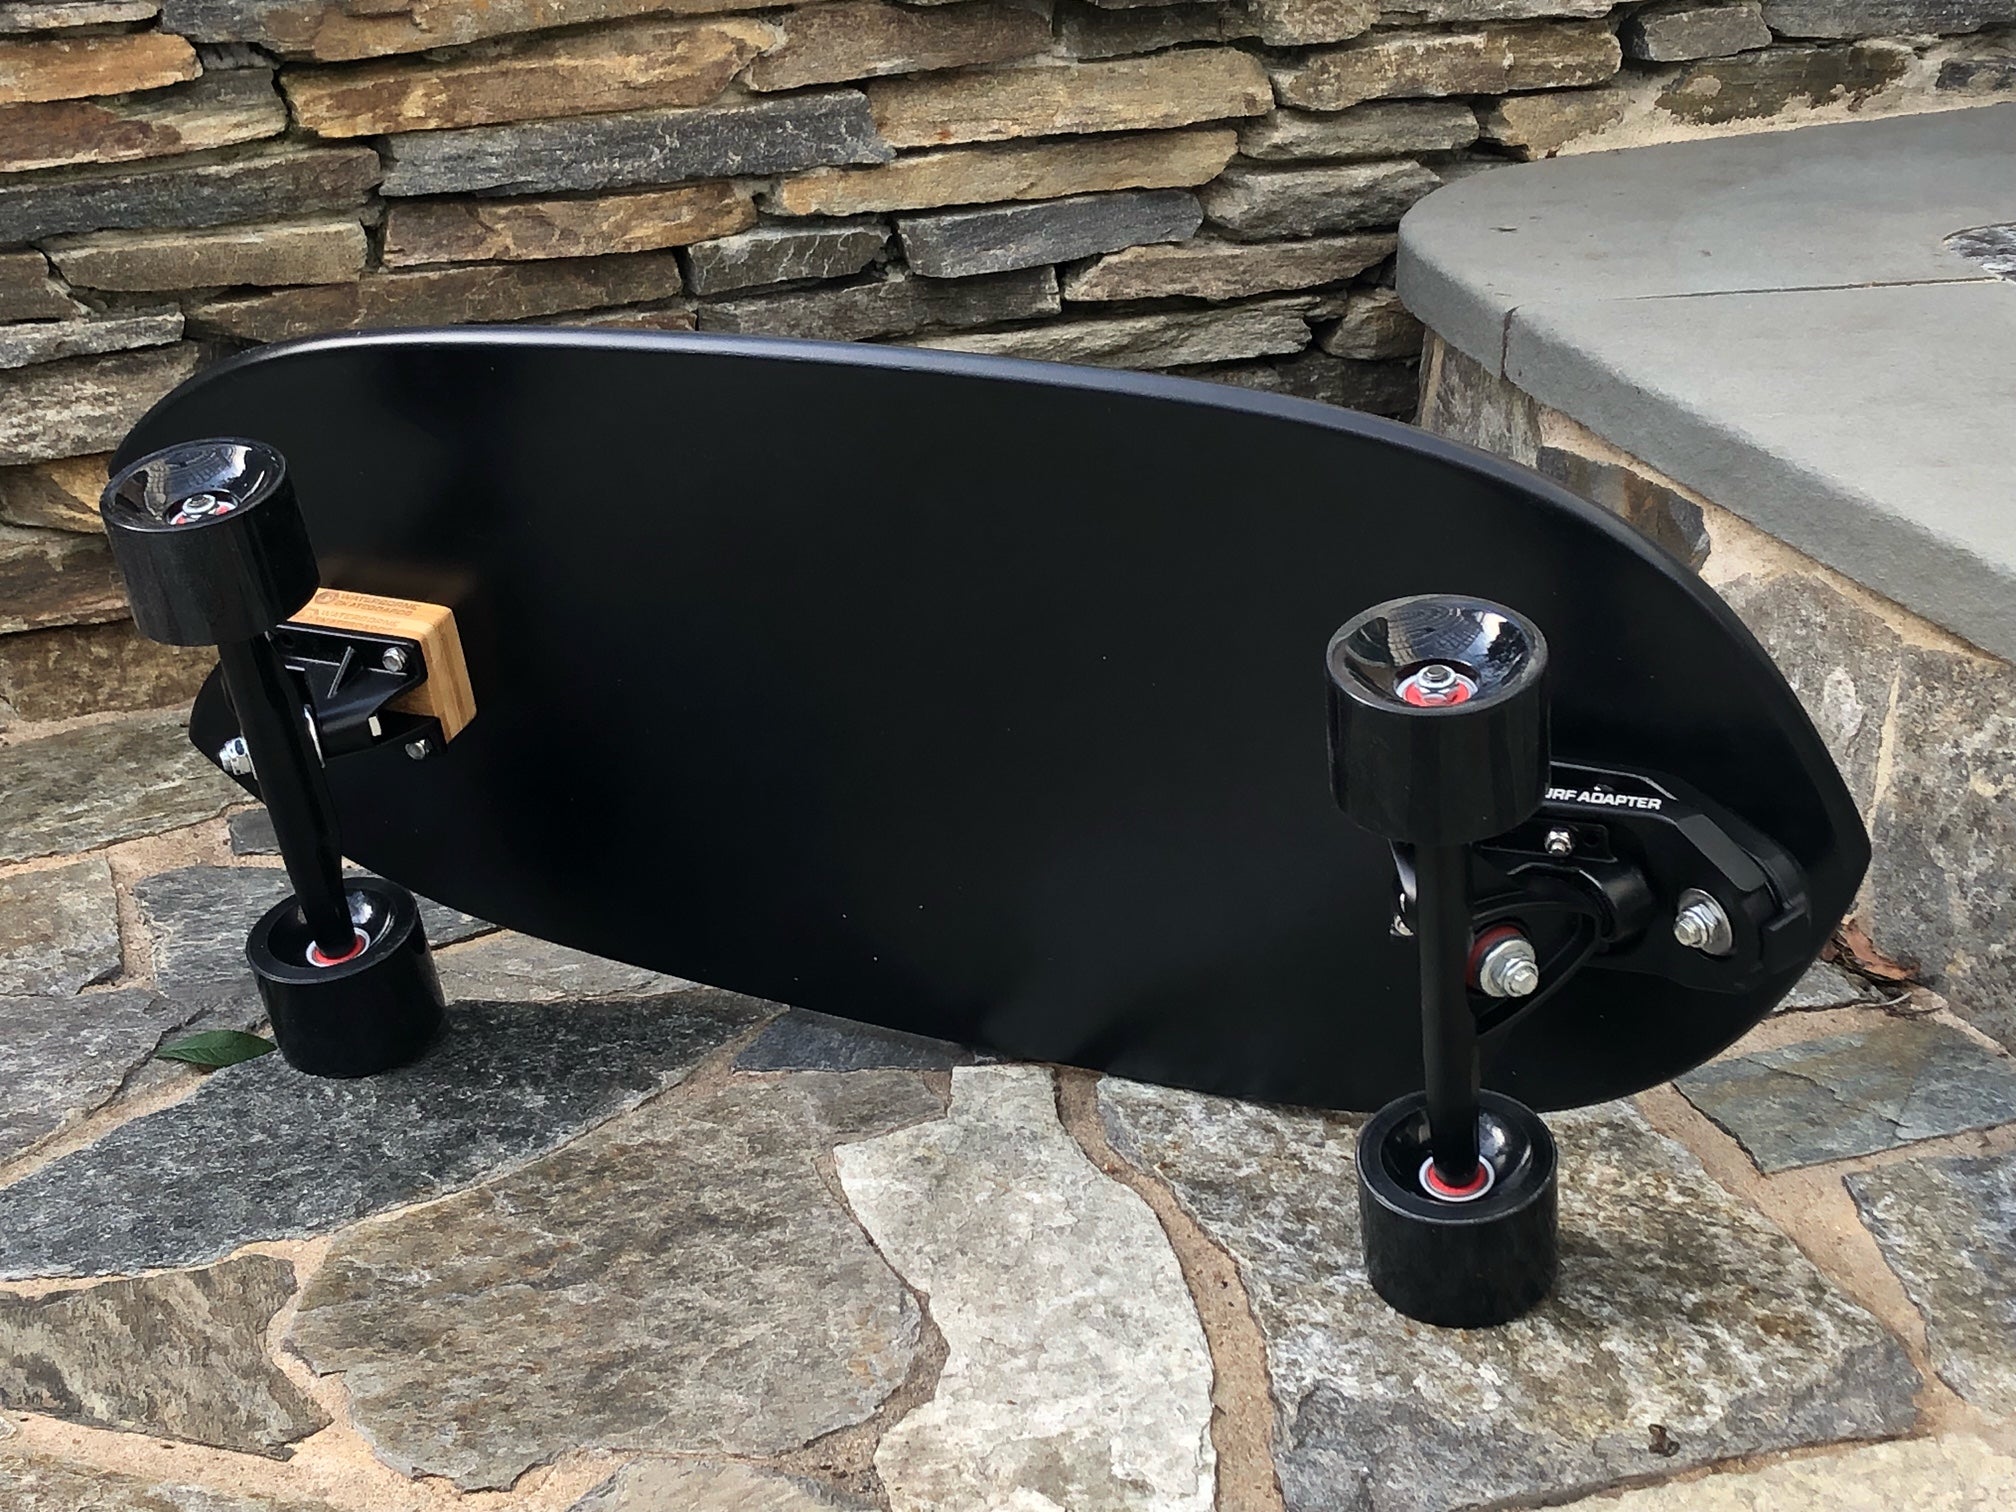 CHUB X WATERBORNE SURF SKATE – Waterborne Skateboards